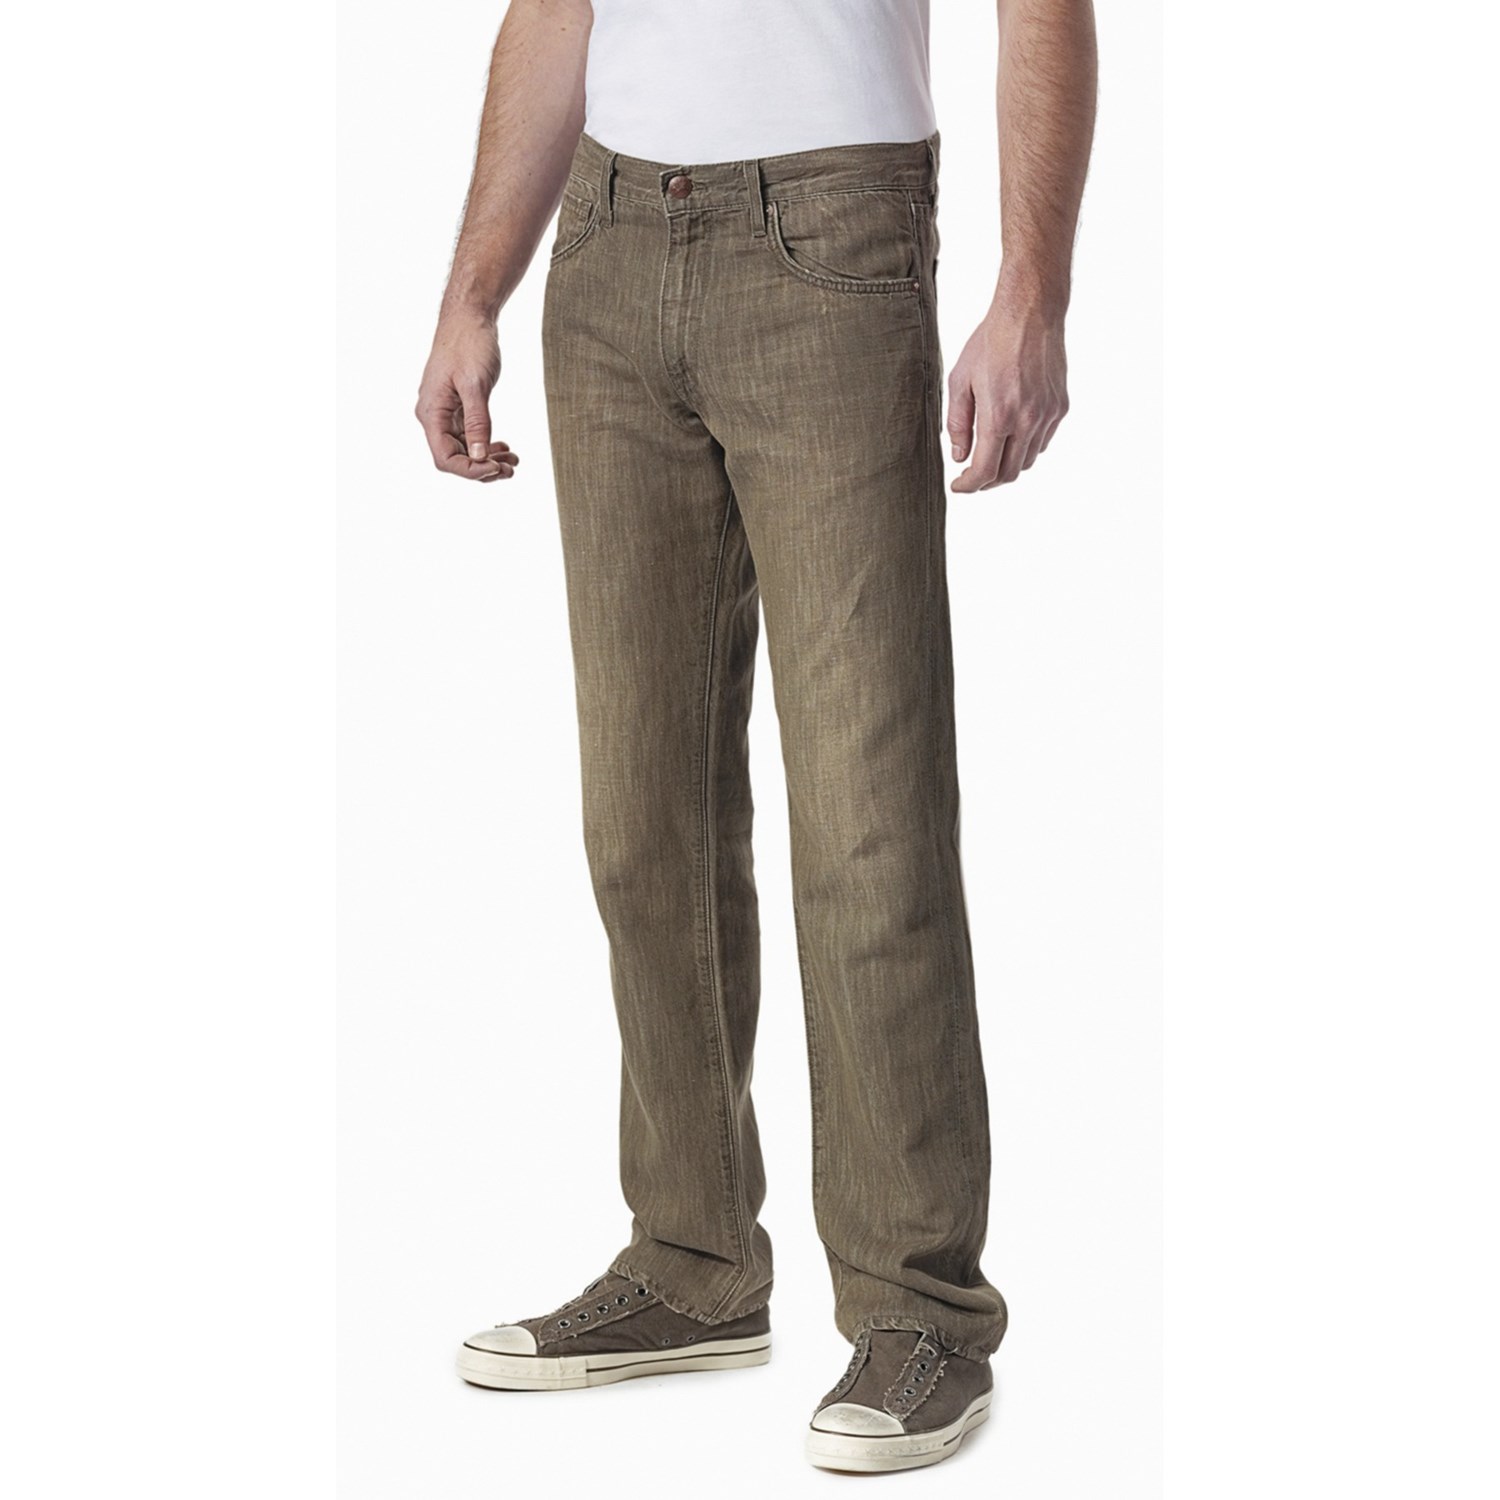 Agave Denim Gringo Moss N Sea Jeans (For Men) 4227T